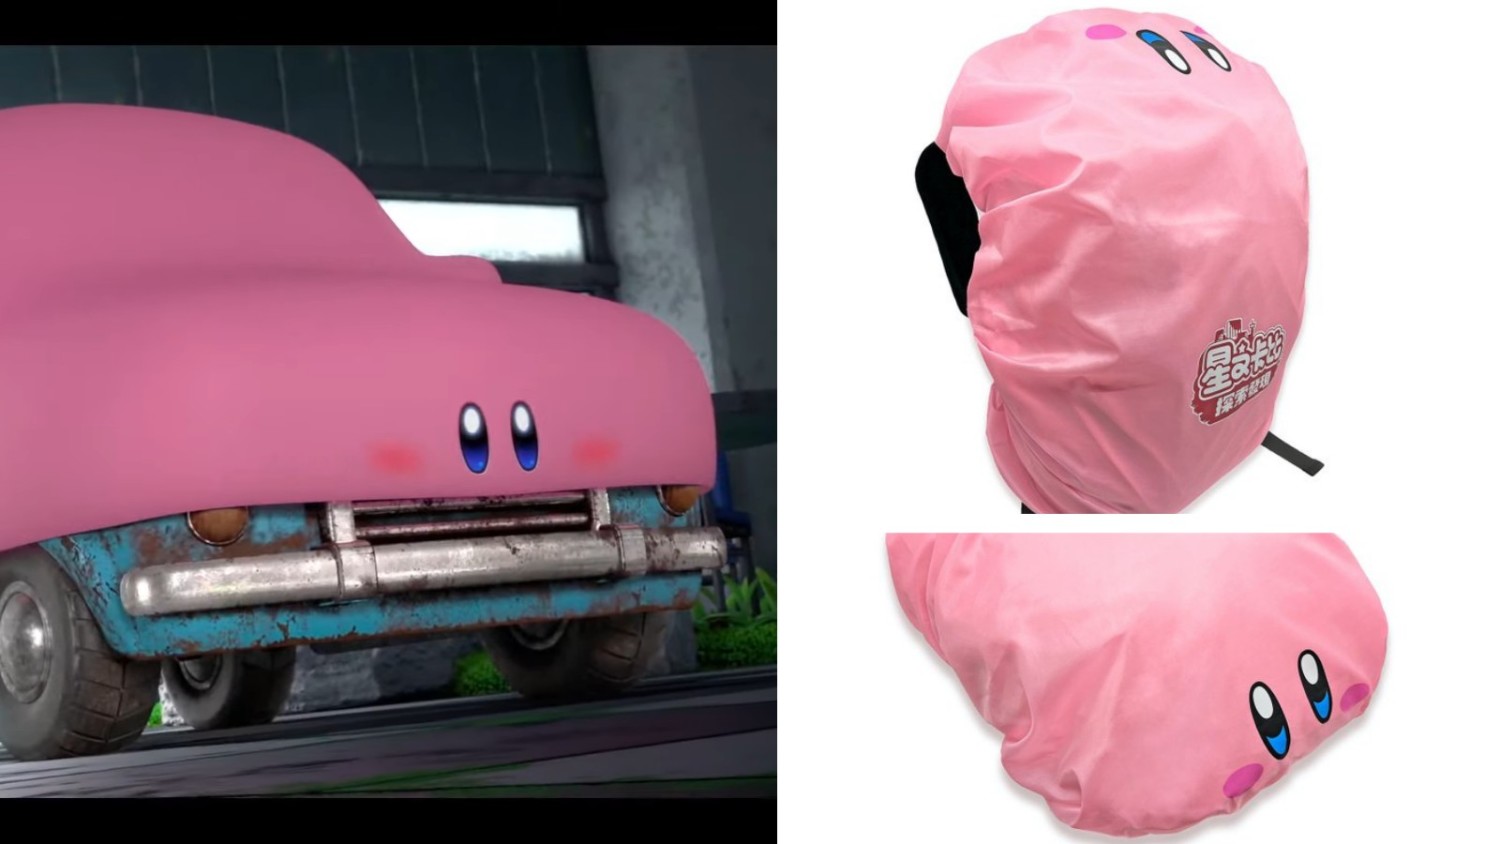 Kirby and the Forgotten Land 'Mouthful Mode' trailer, screenshots